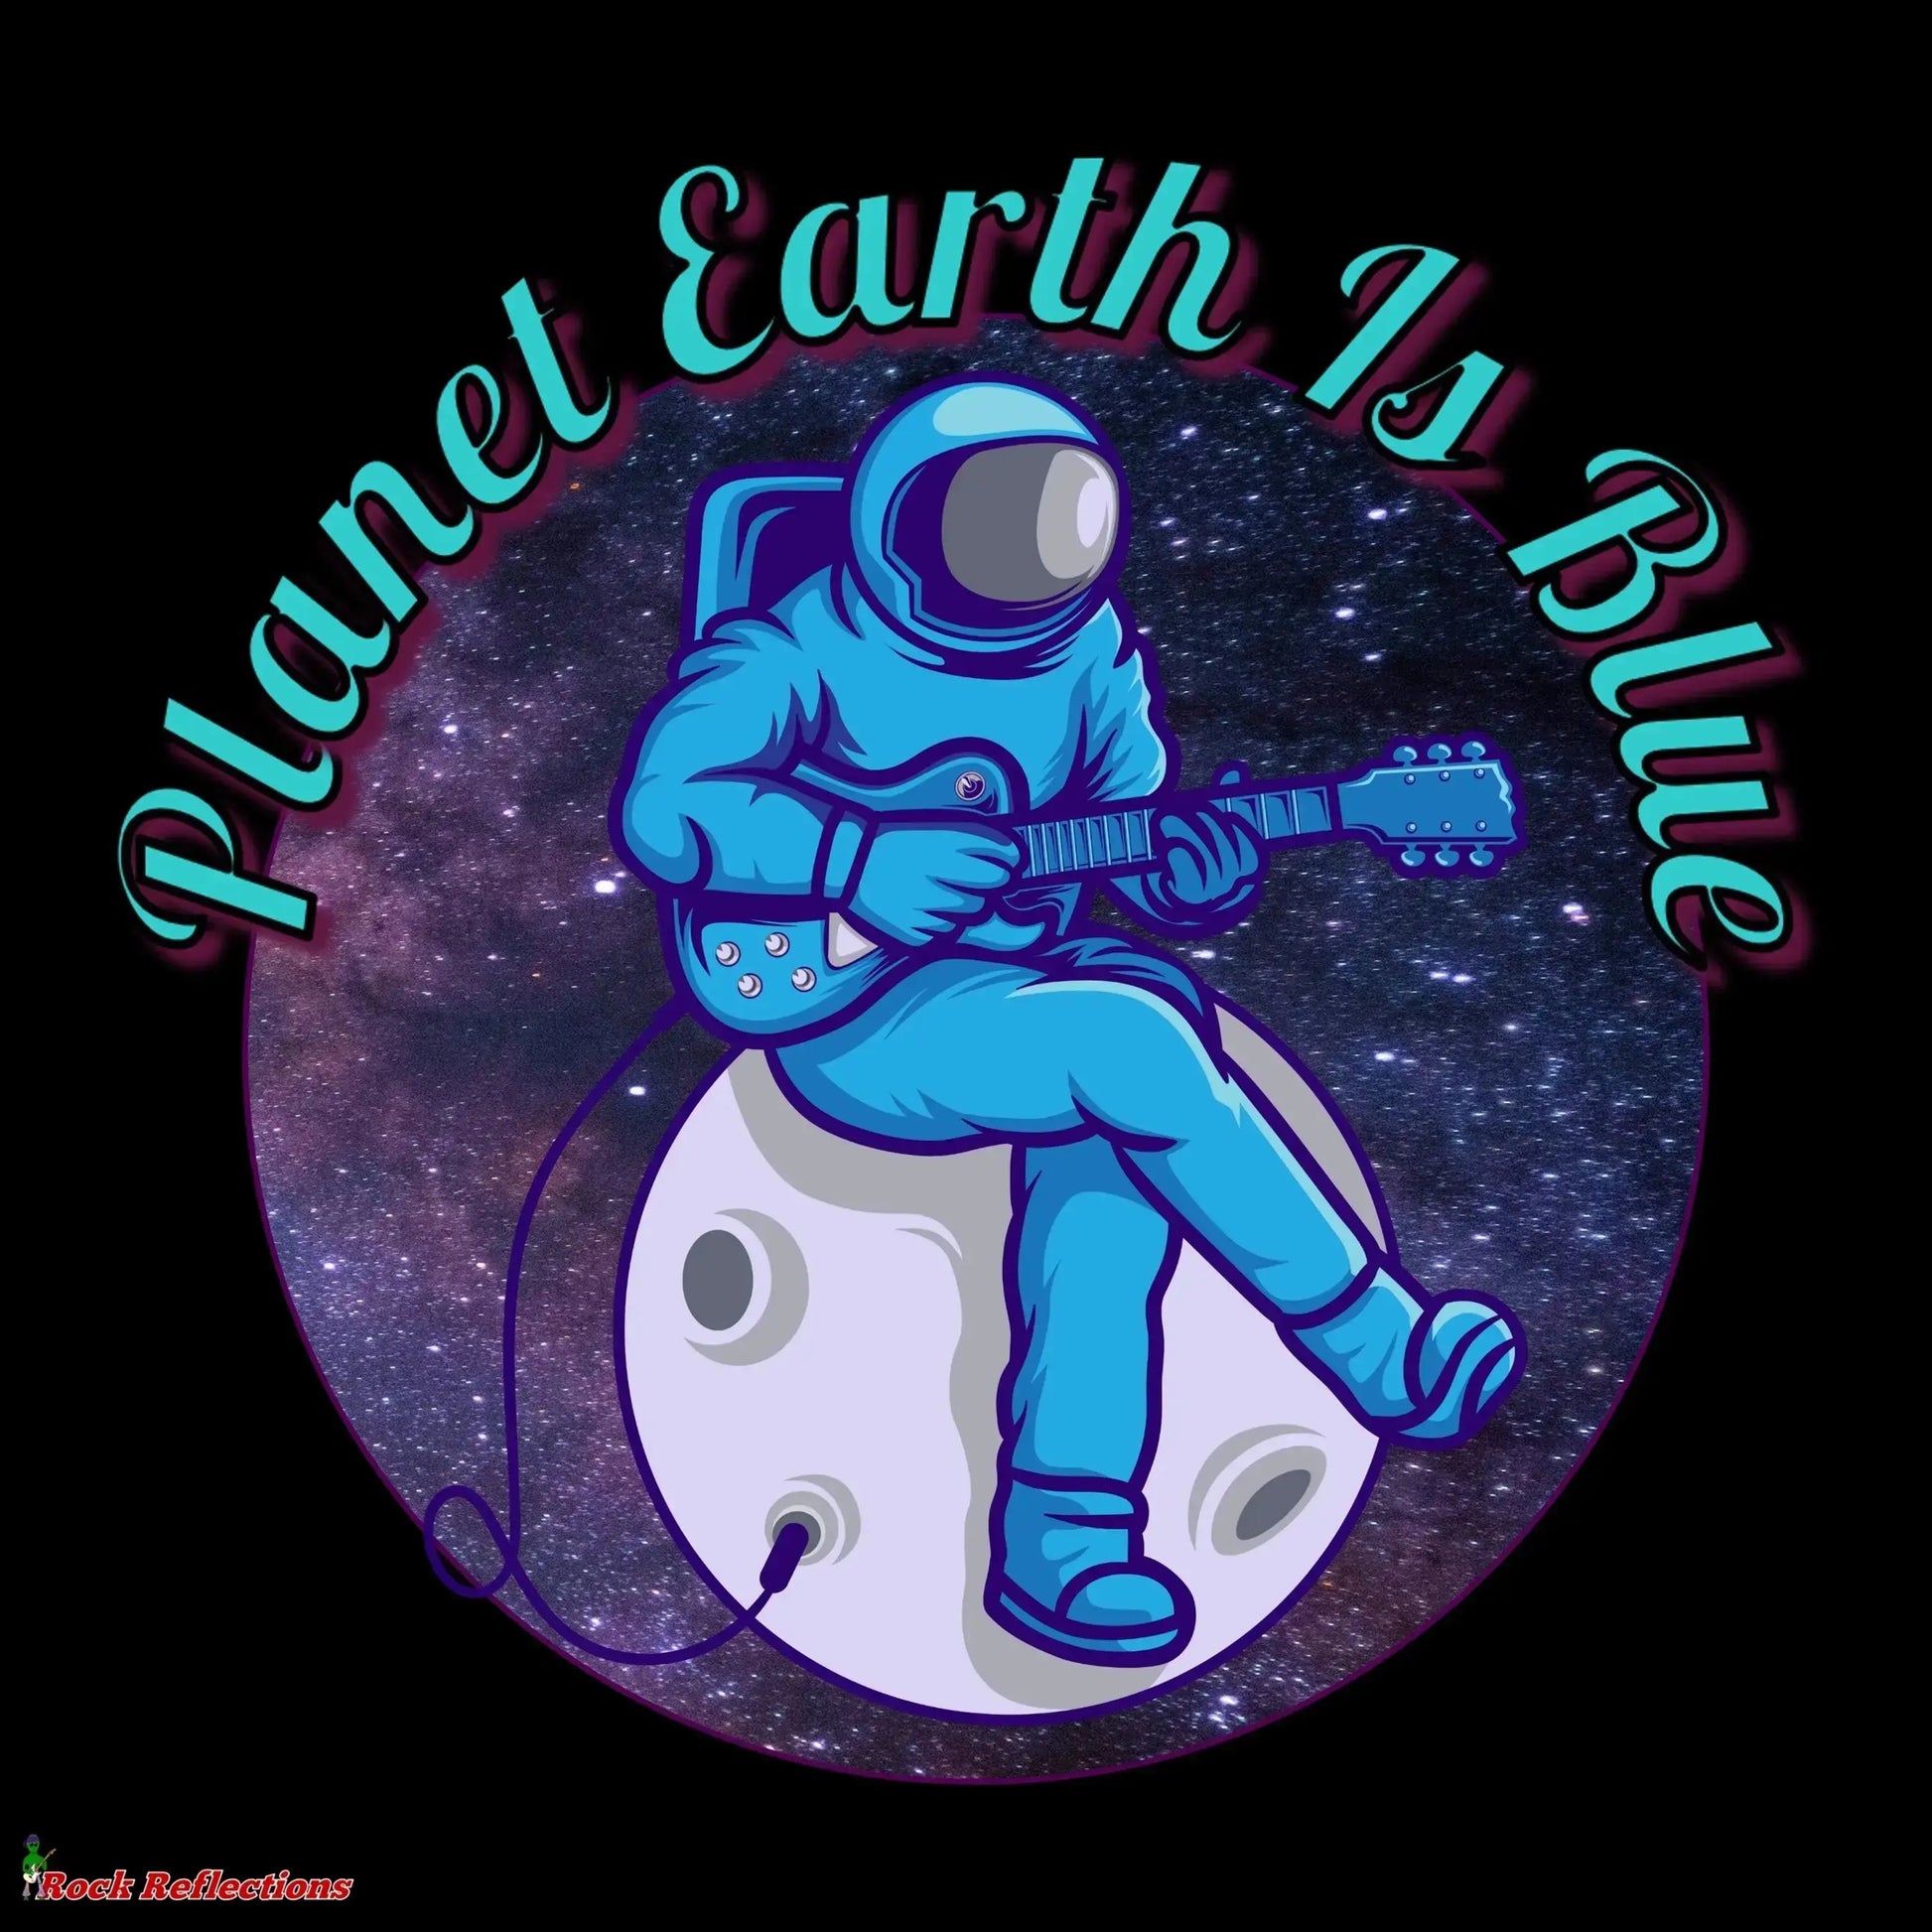 Planet Earth Is Blue Mug SPOD